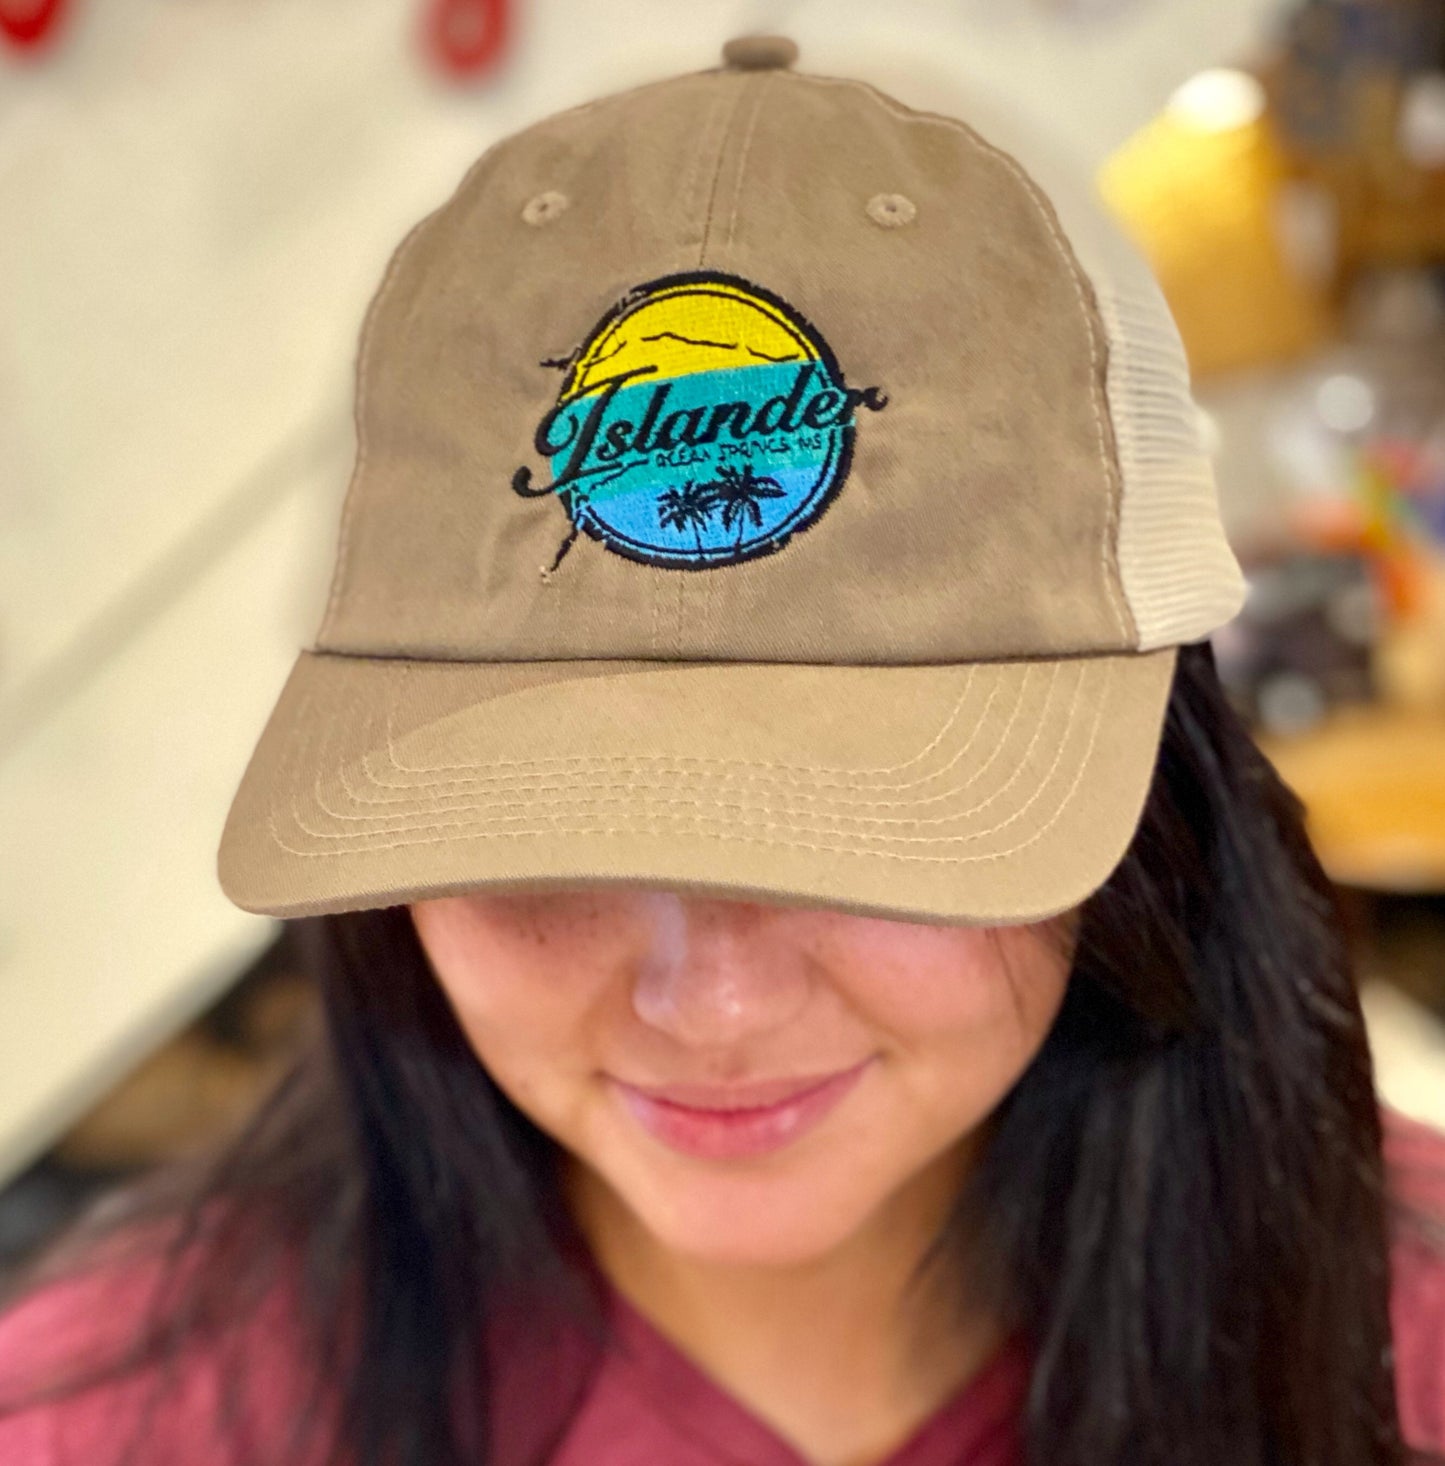 Islander Circle Islands hat